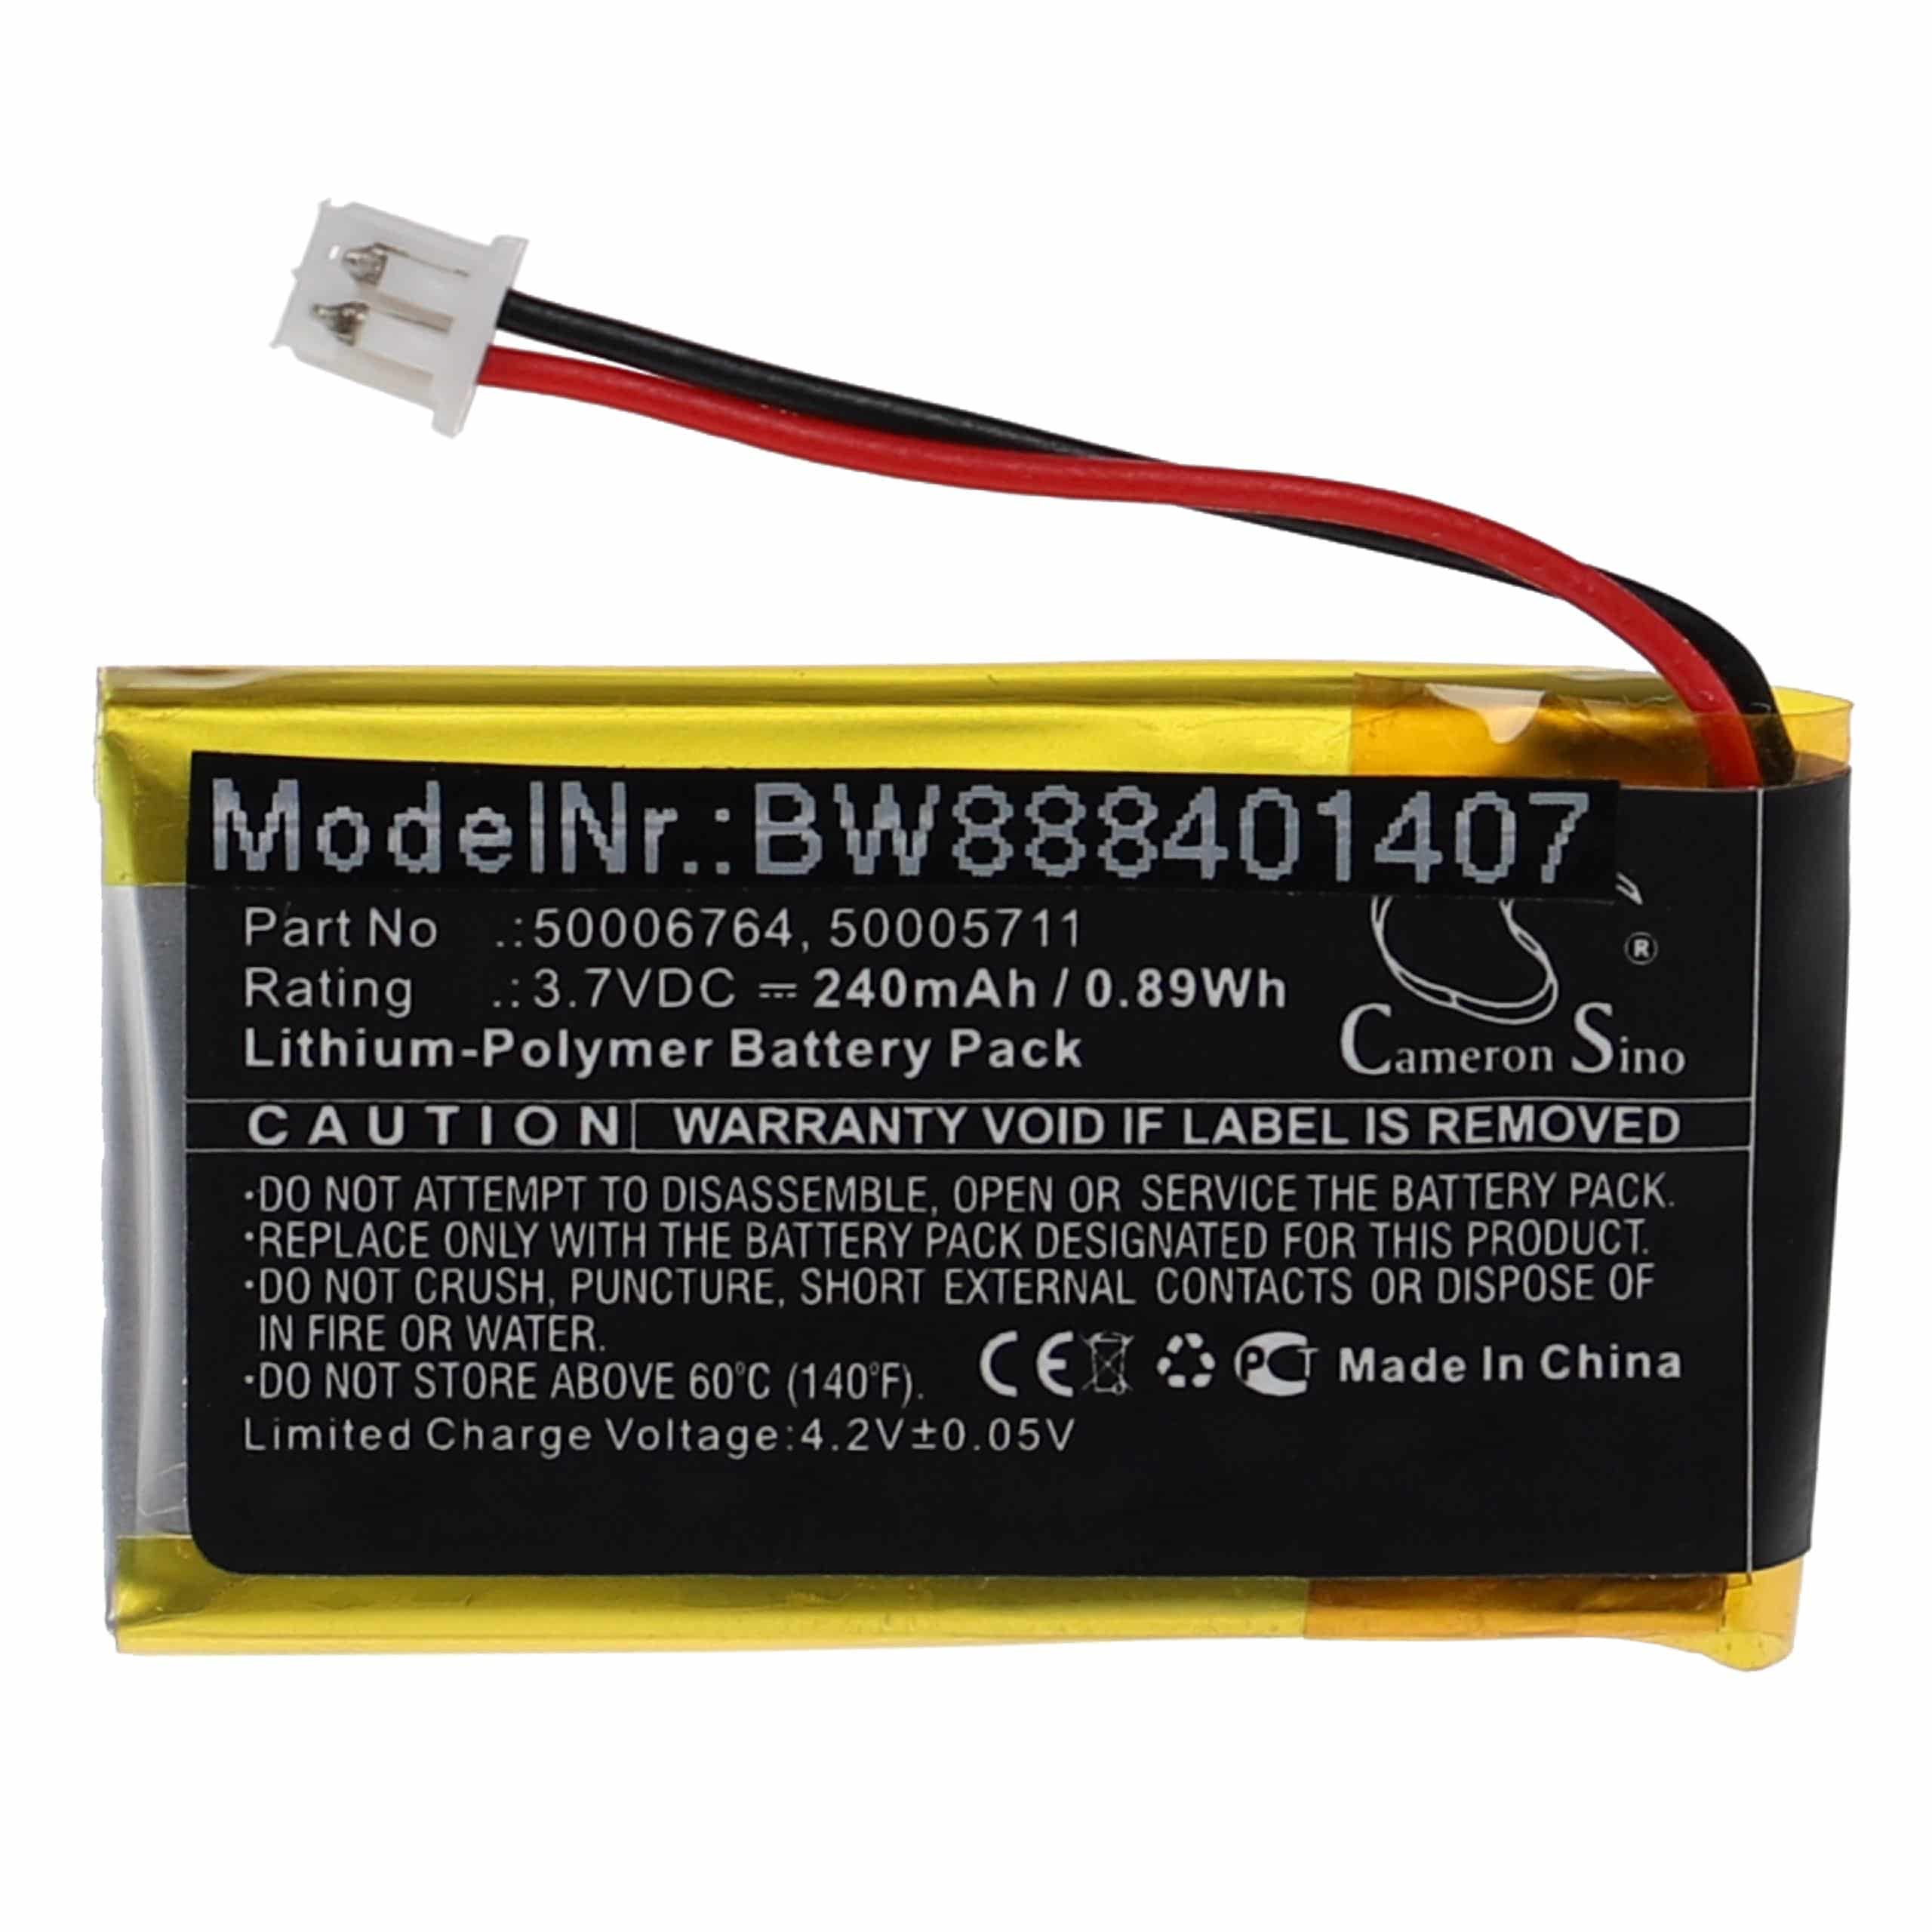 Landline Phone Battery Replacement for Mitel 50006764, 50005711 - 240mAh 3.7V Li-polymer